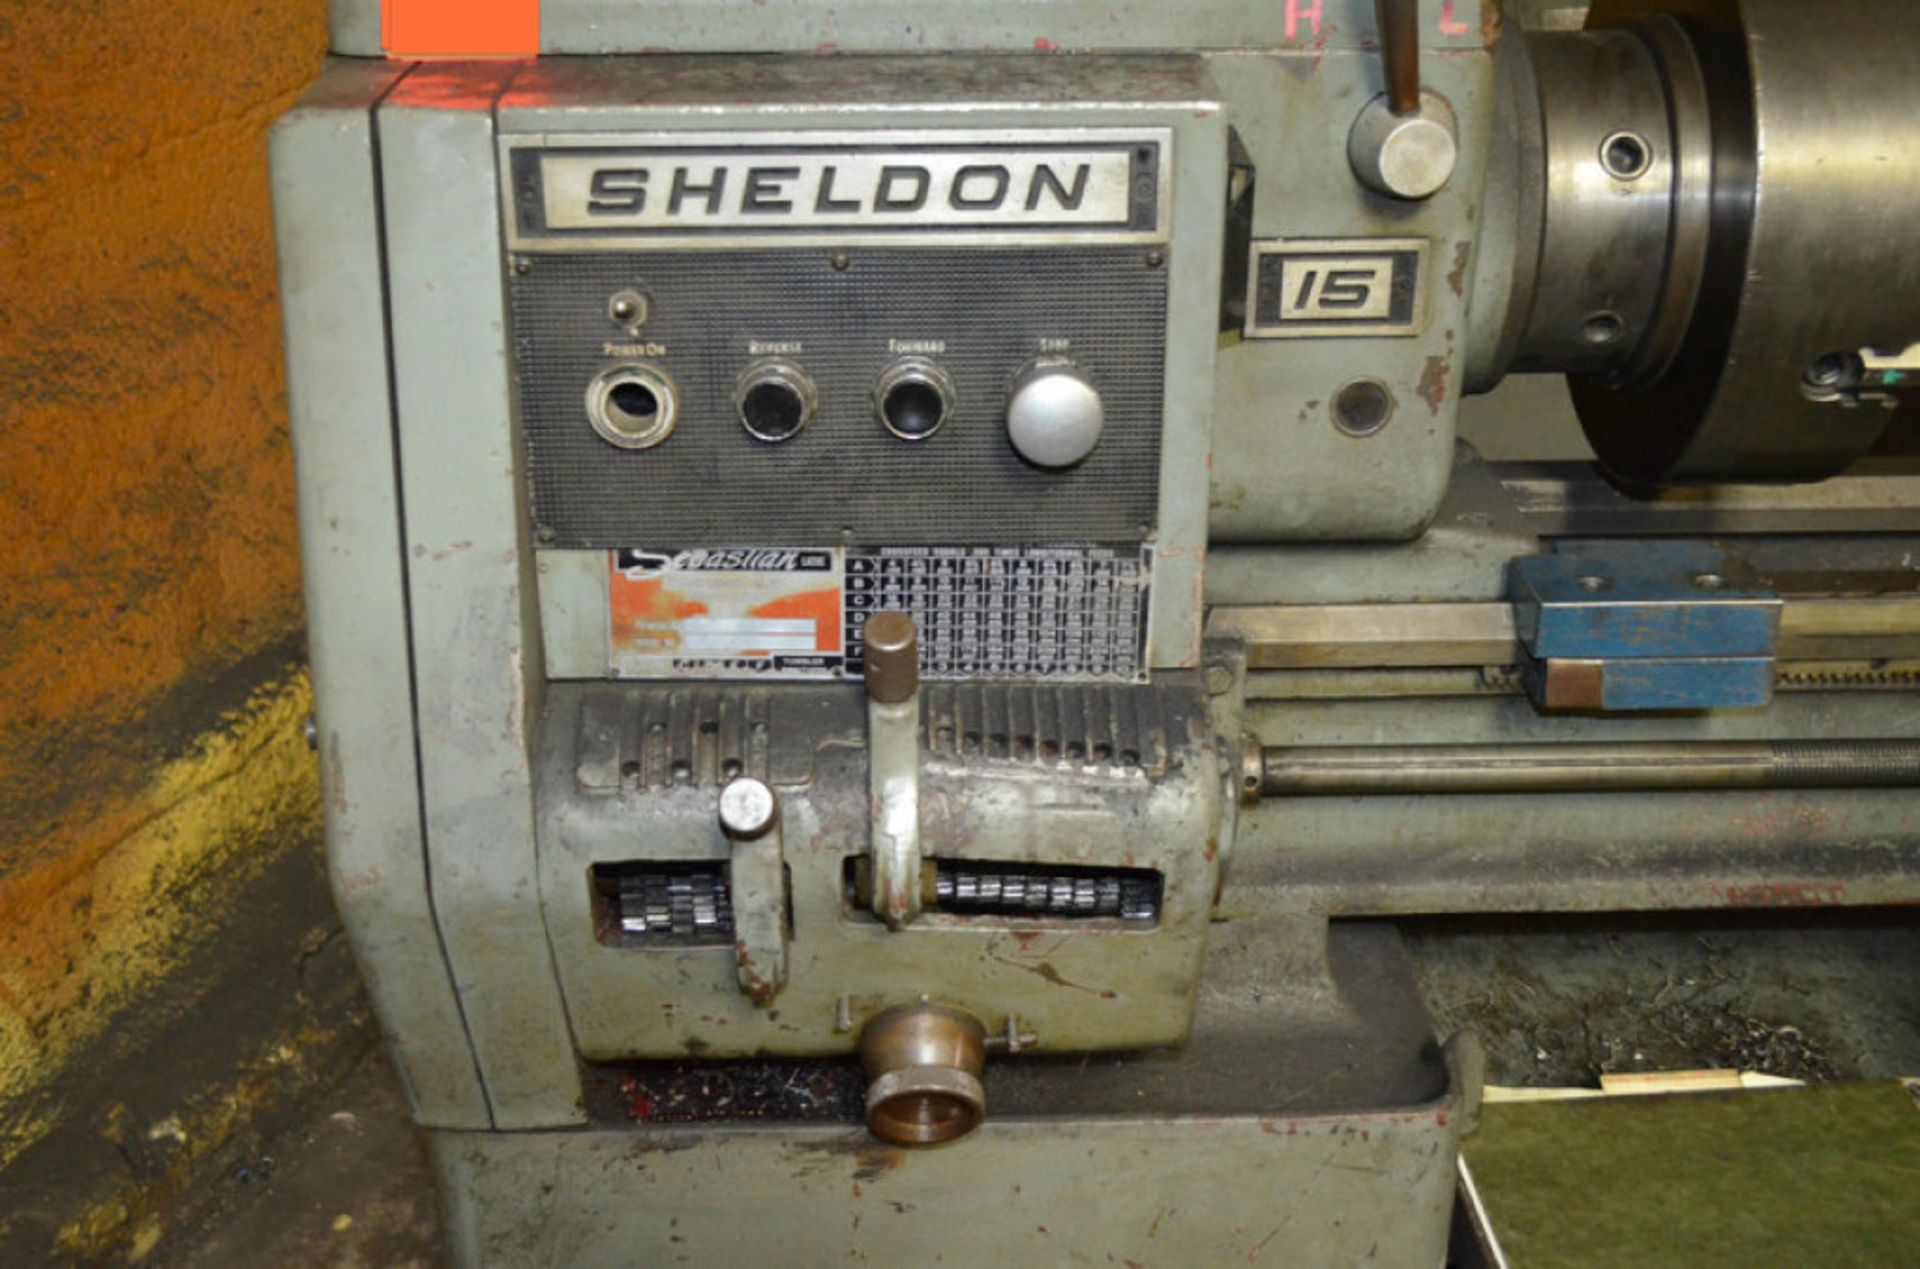 Sheldon 15 in. x 36 in. Tool Room Lathe - Image 9 of 9